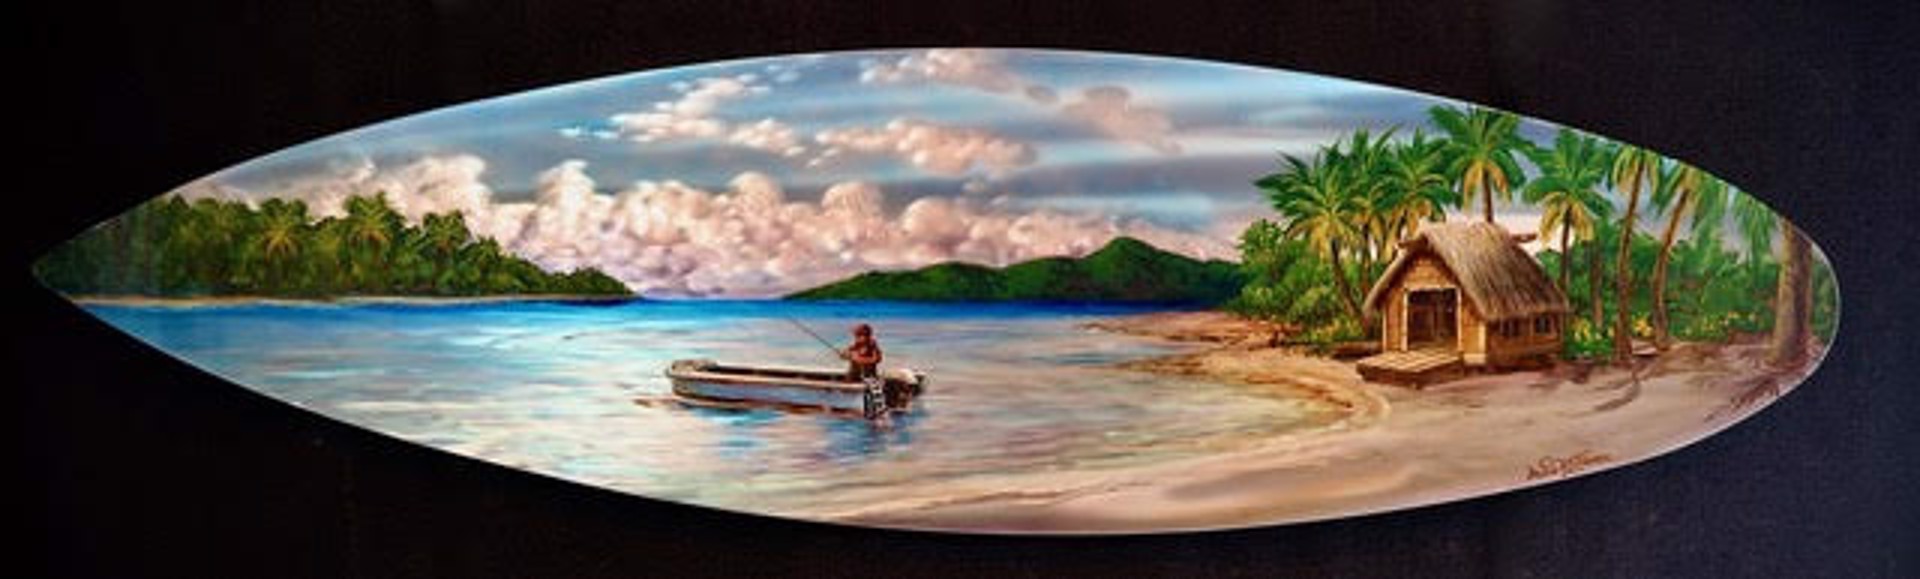 Polynesian Palette prototype # 4 surfboard by Dennis Mathewson